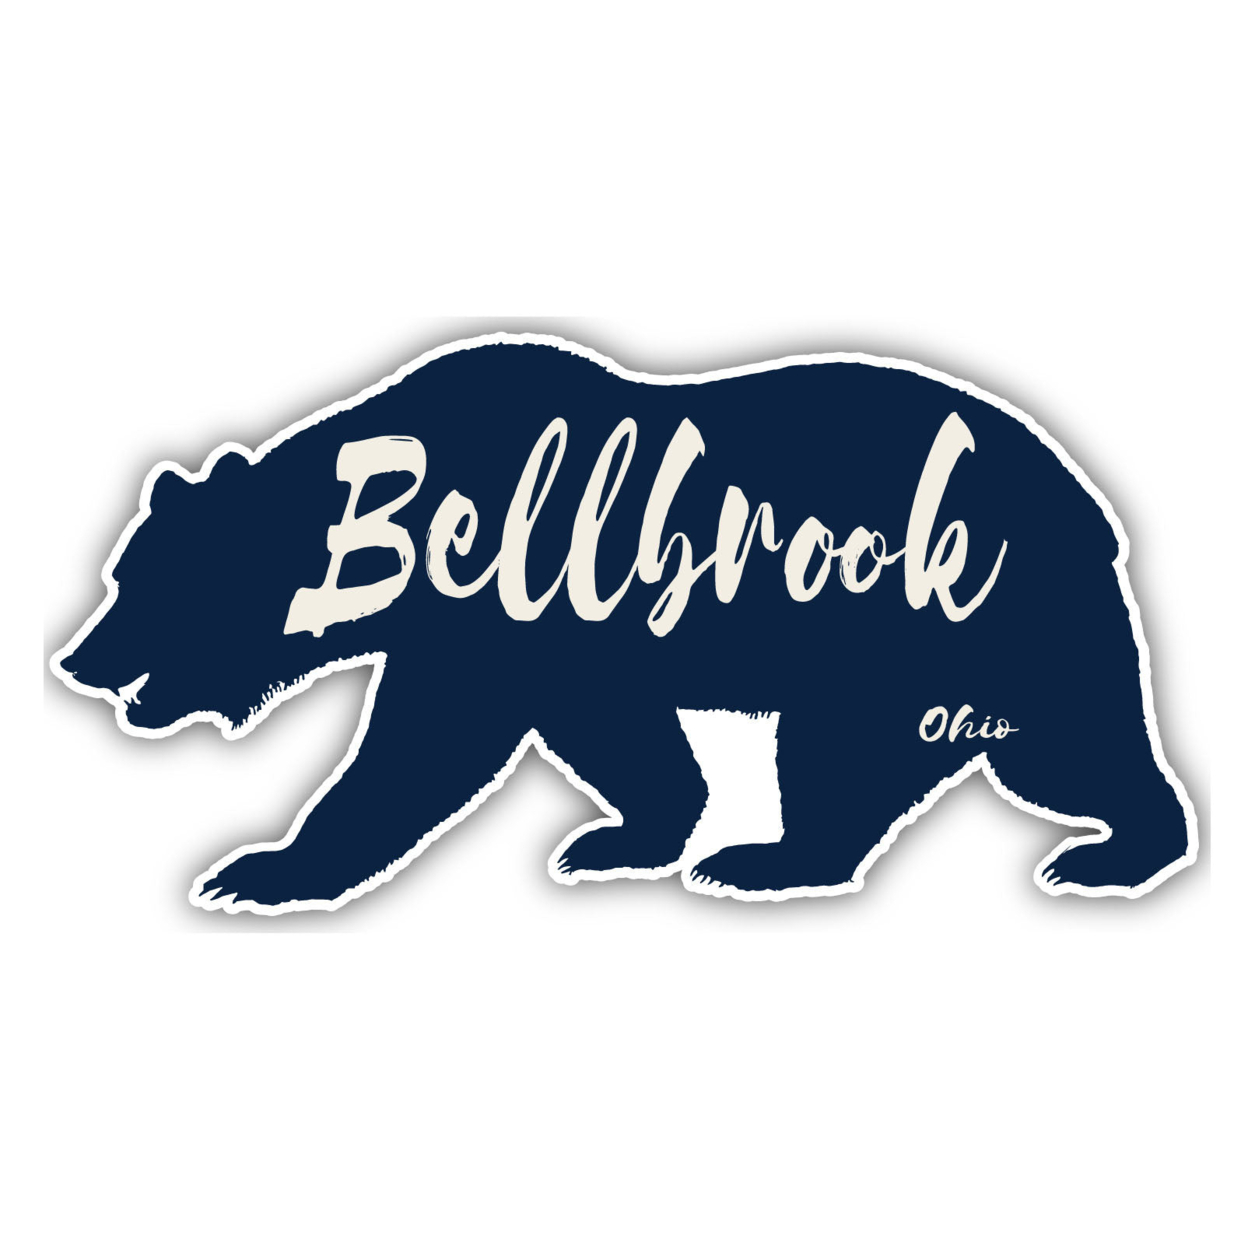 Bellbrook Ohio Souvenir Decorative Stickers (Choose Theme And Size) - Single Unit, 6-Inch, Bear